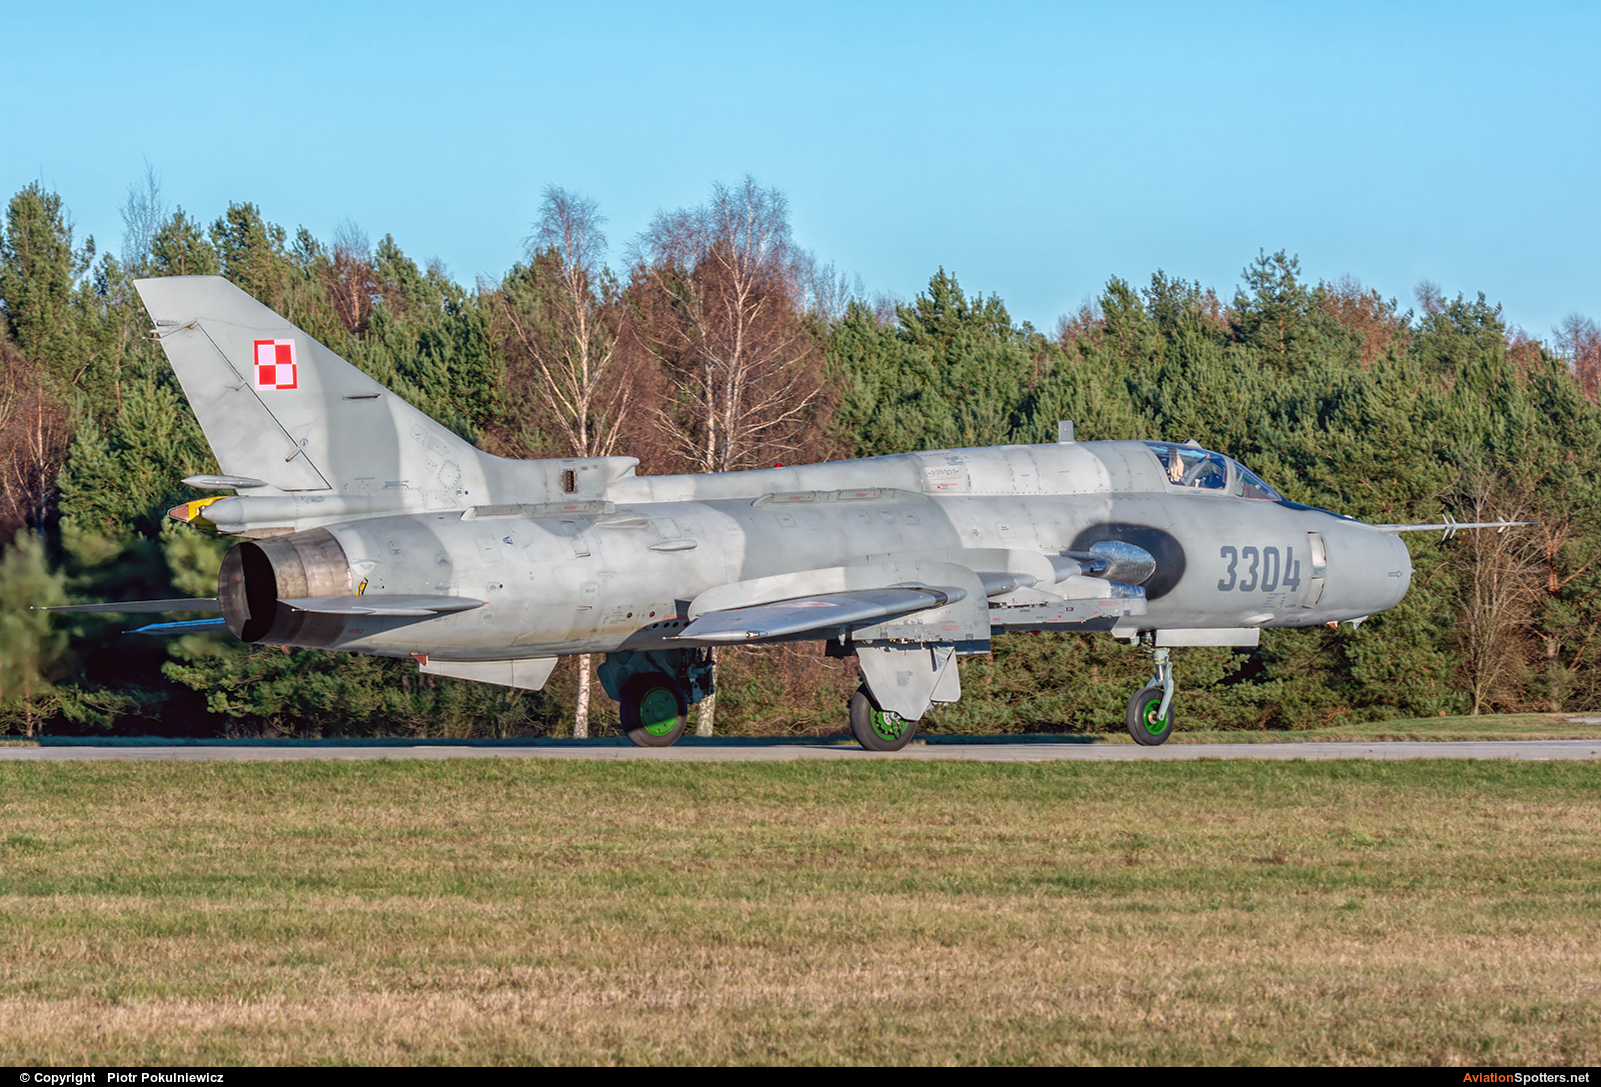 Poland - Air Force  -  Su-22M-4  (3304) By Piotr Pokulniewicz (Piciu)